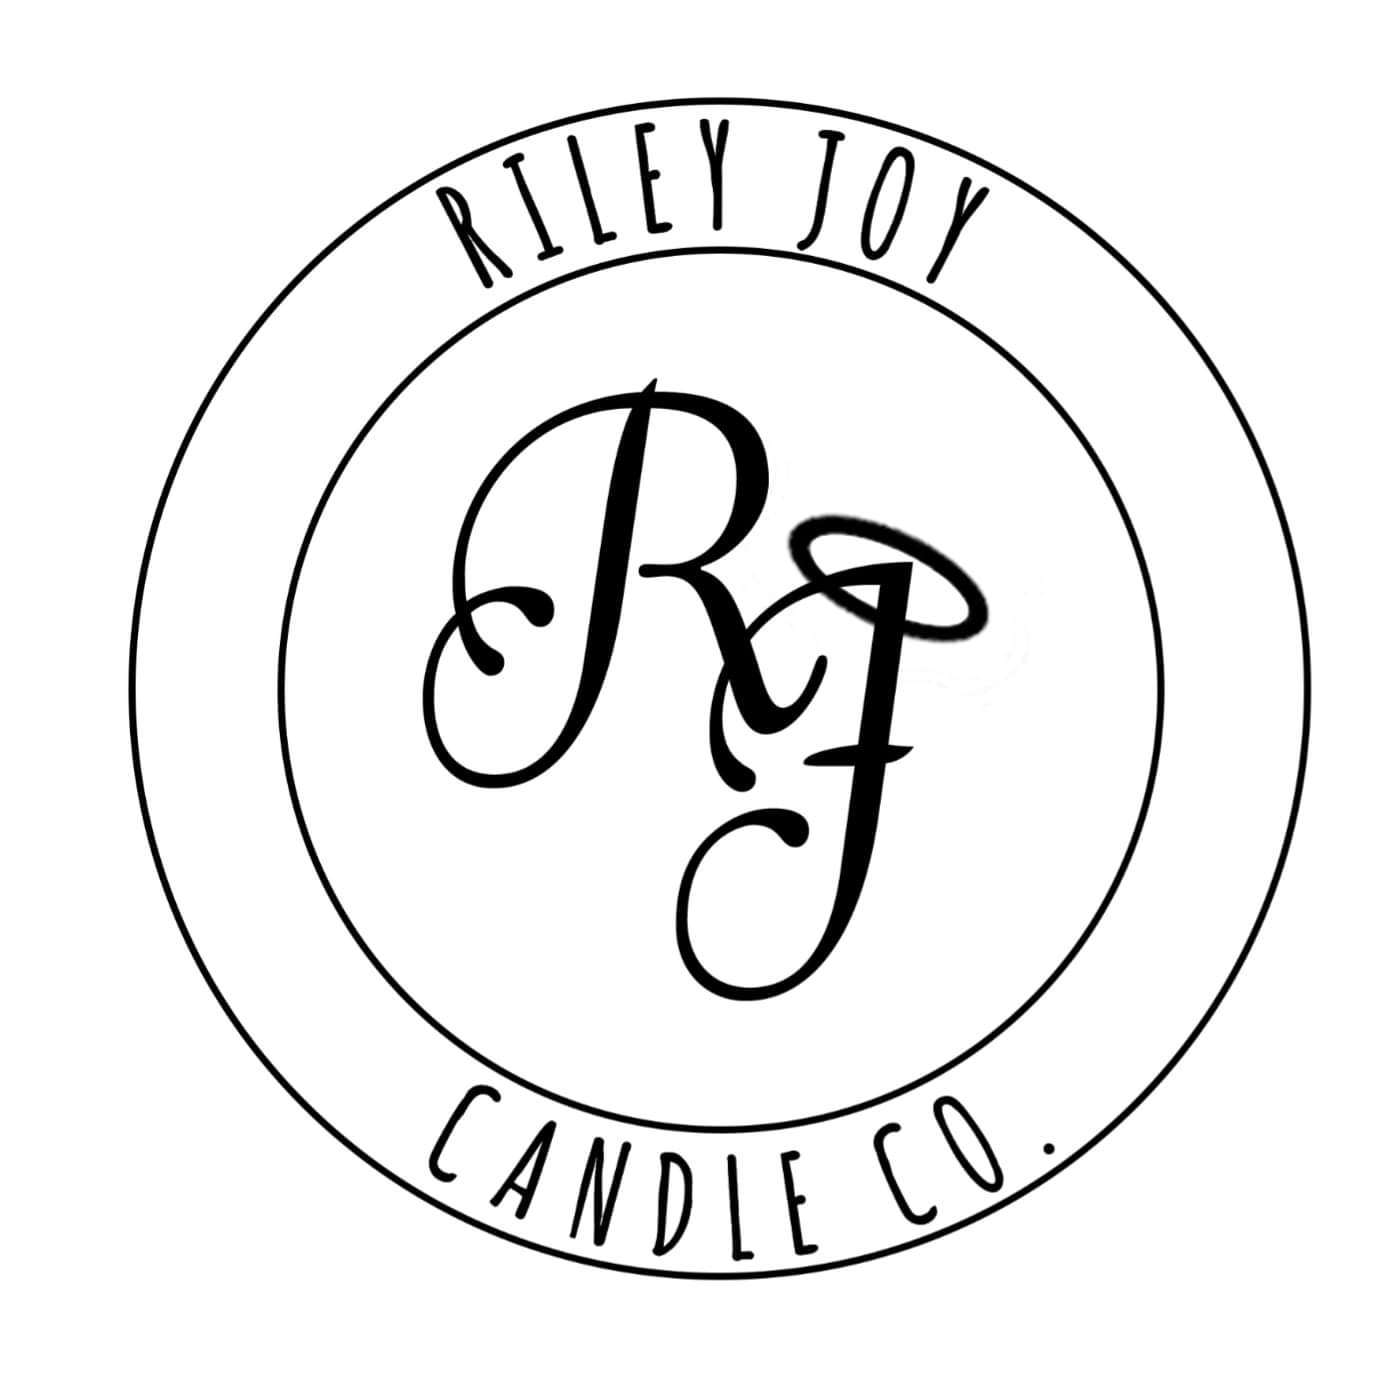 Riley Joy Candle Company Logo